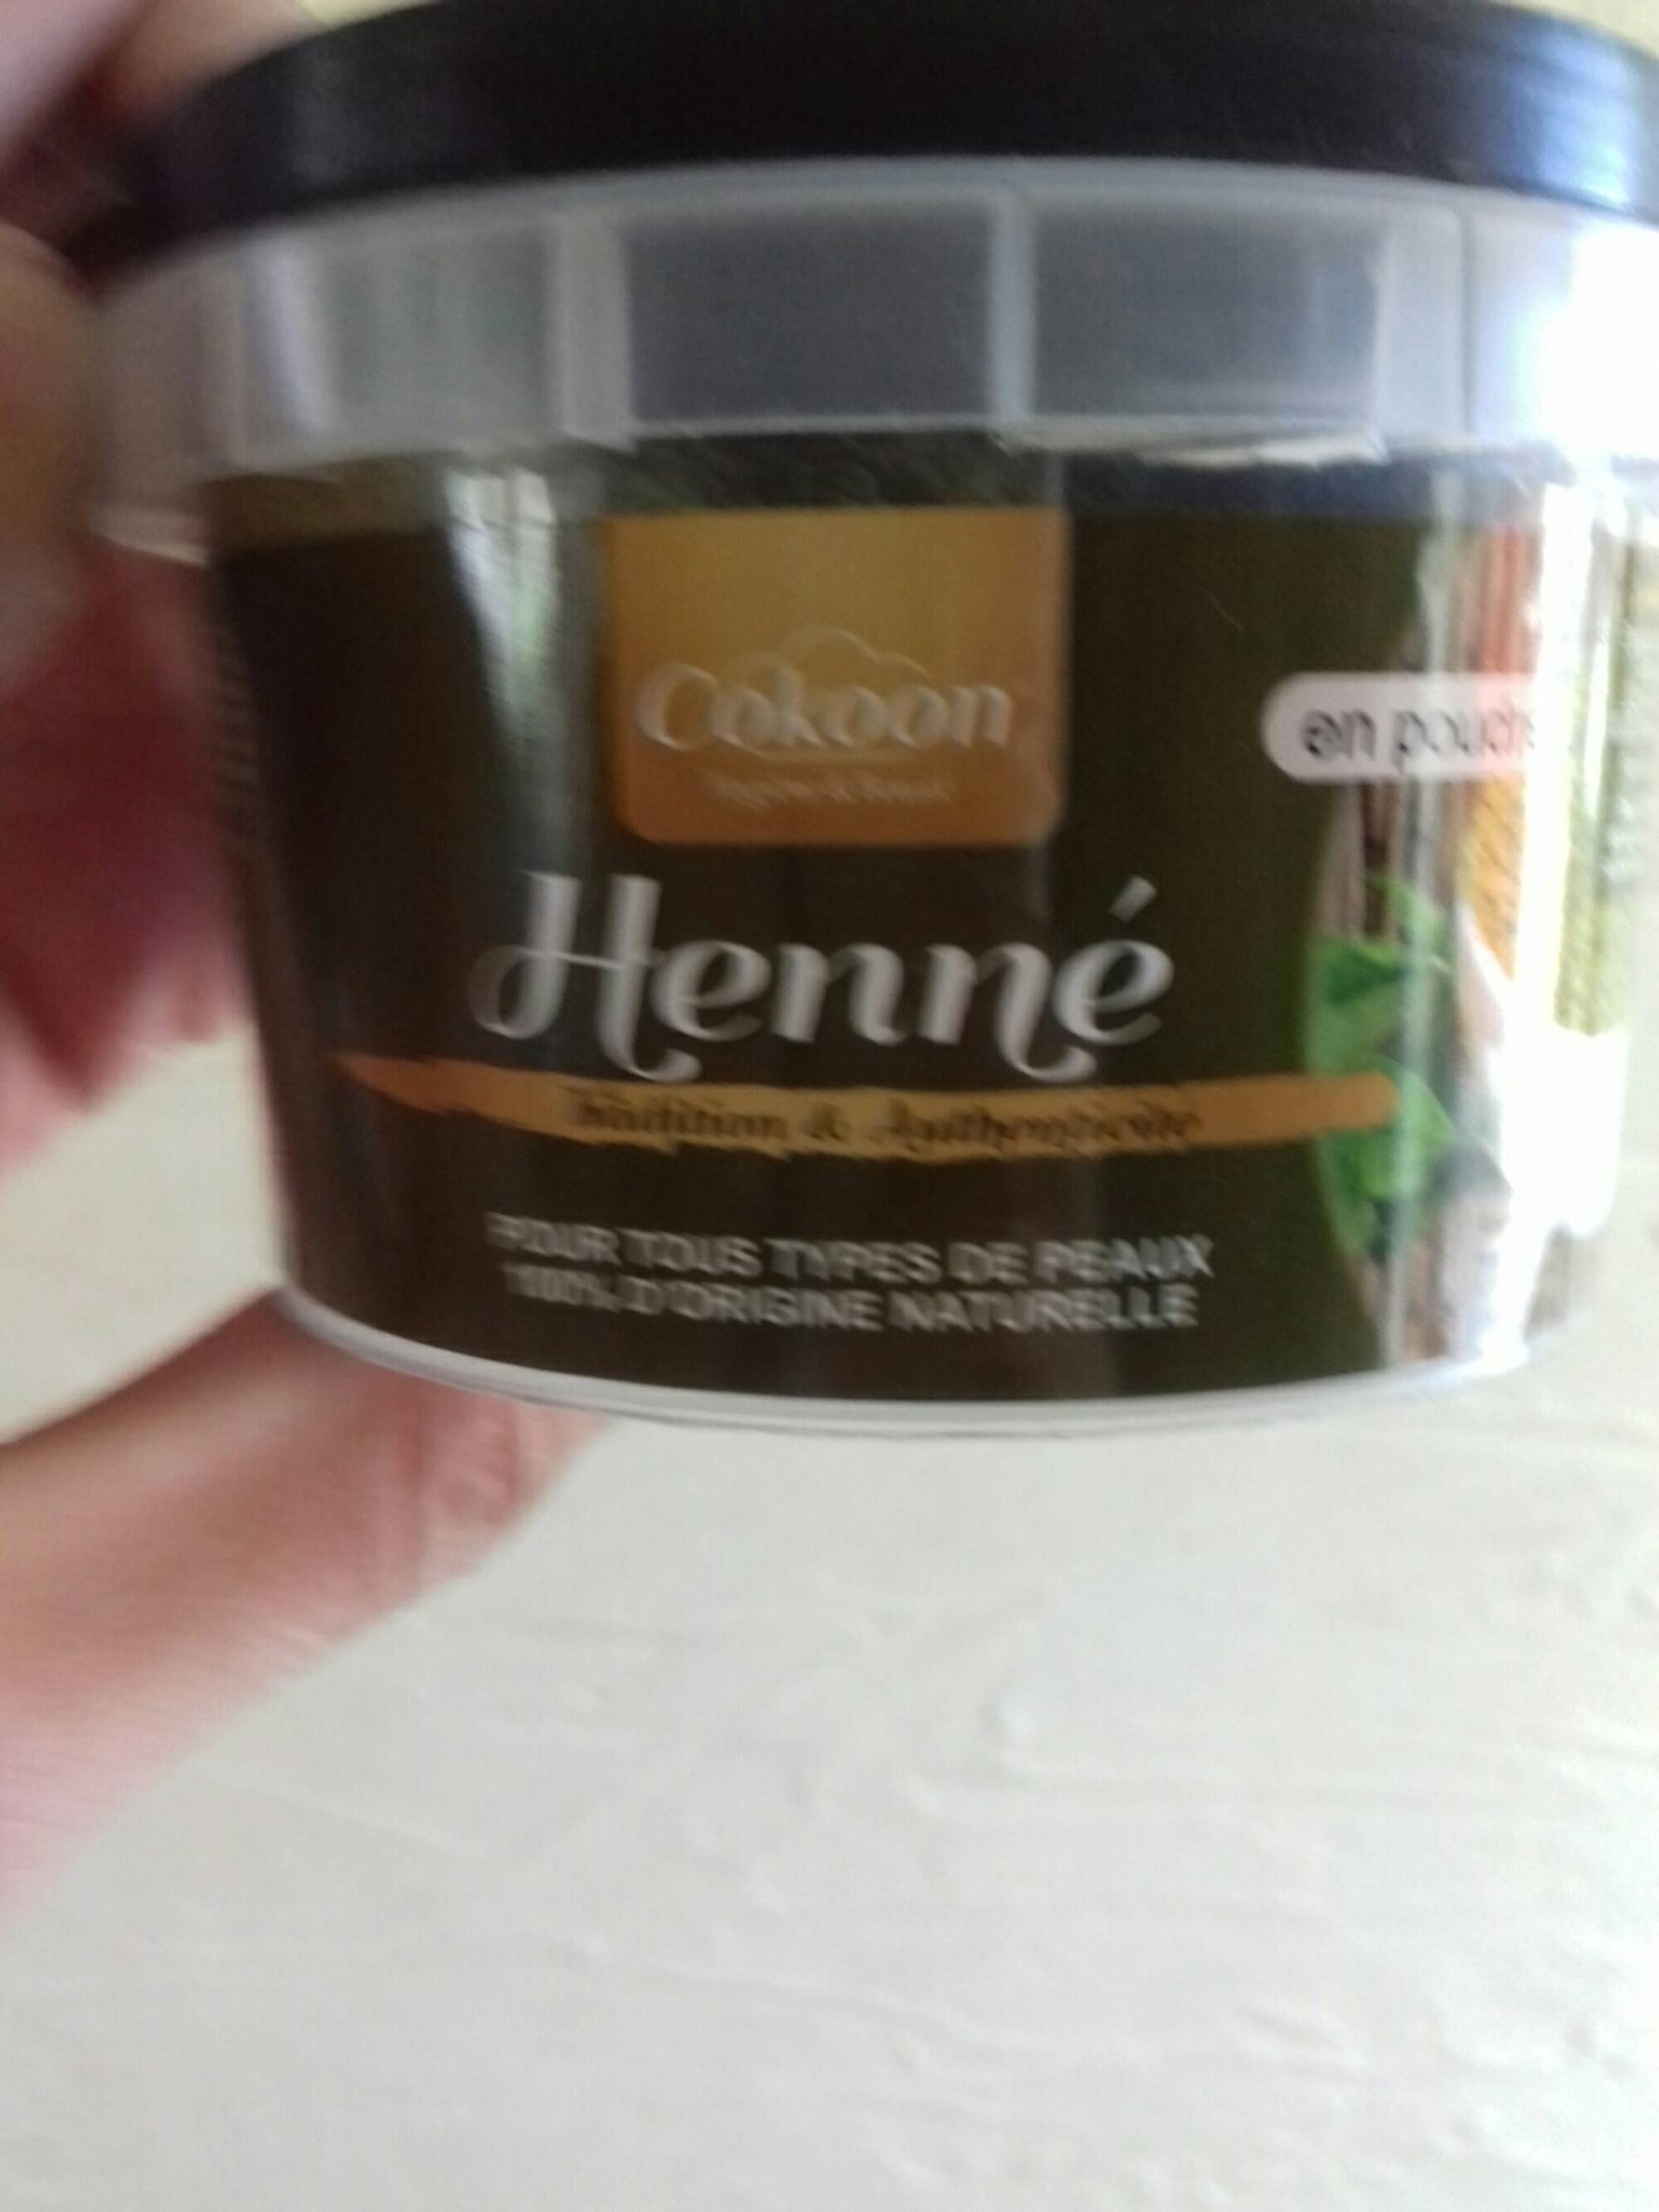 COKOON - Henné en poudre